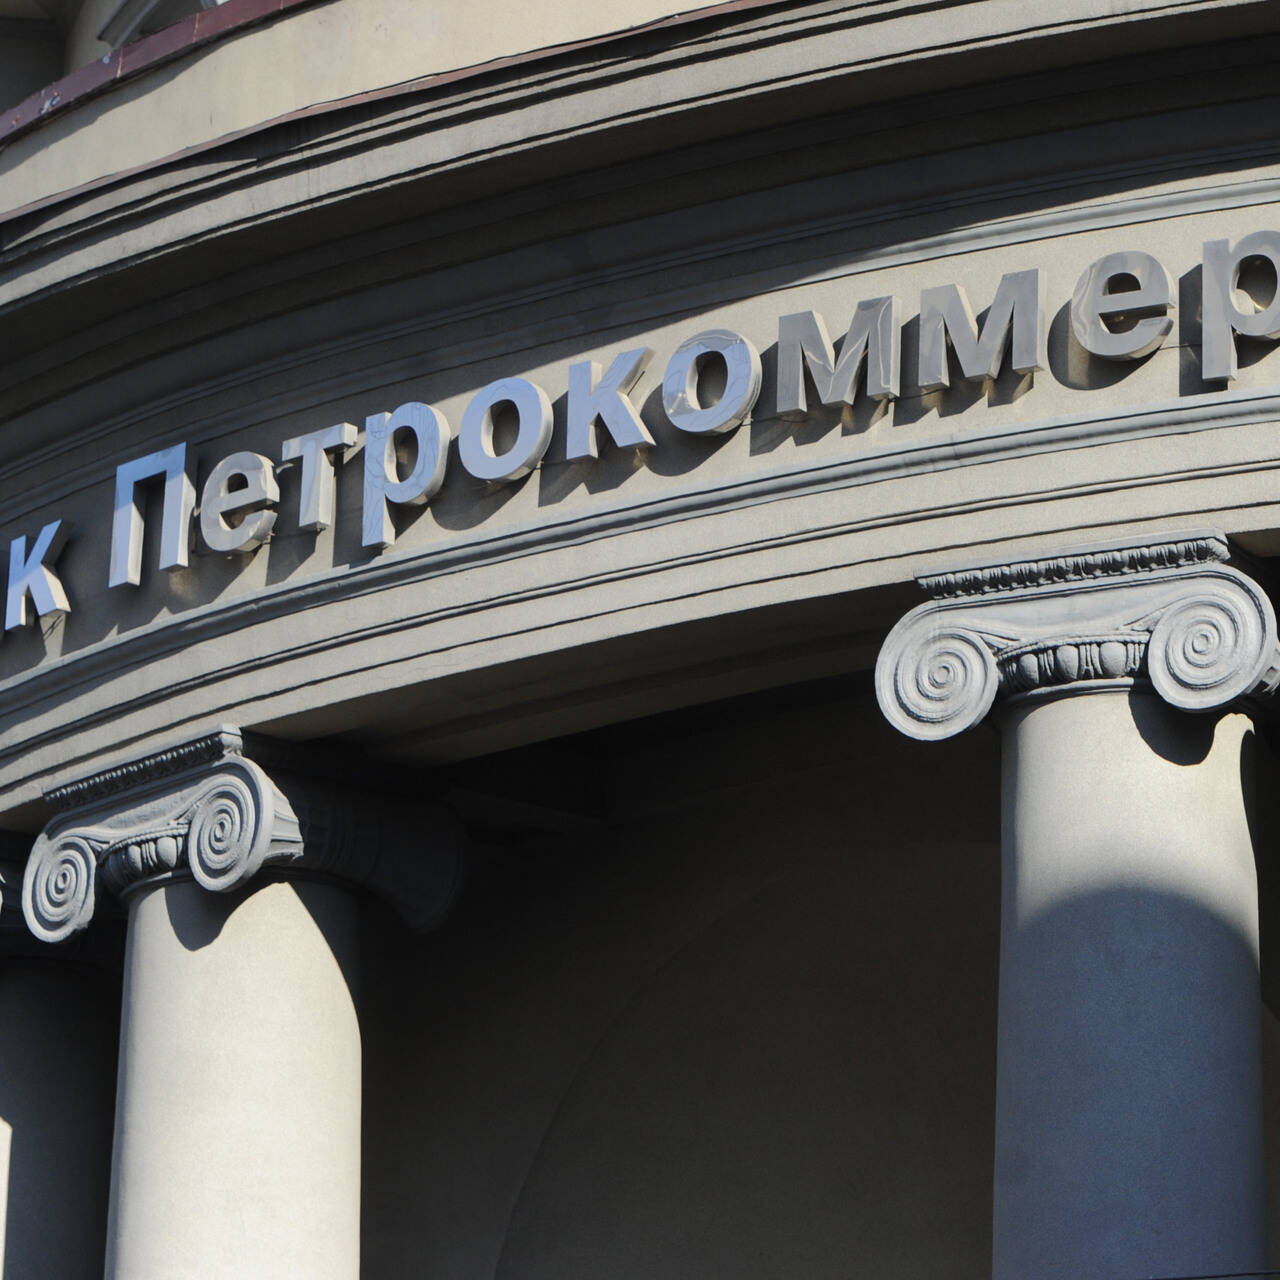 Спд банк. Банк Петрокоммерц. Банк Петрокоммерц Москва. Петрокоммерц логотип. Банк Петрокоммерц здание.